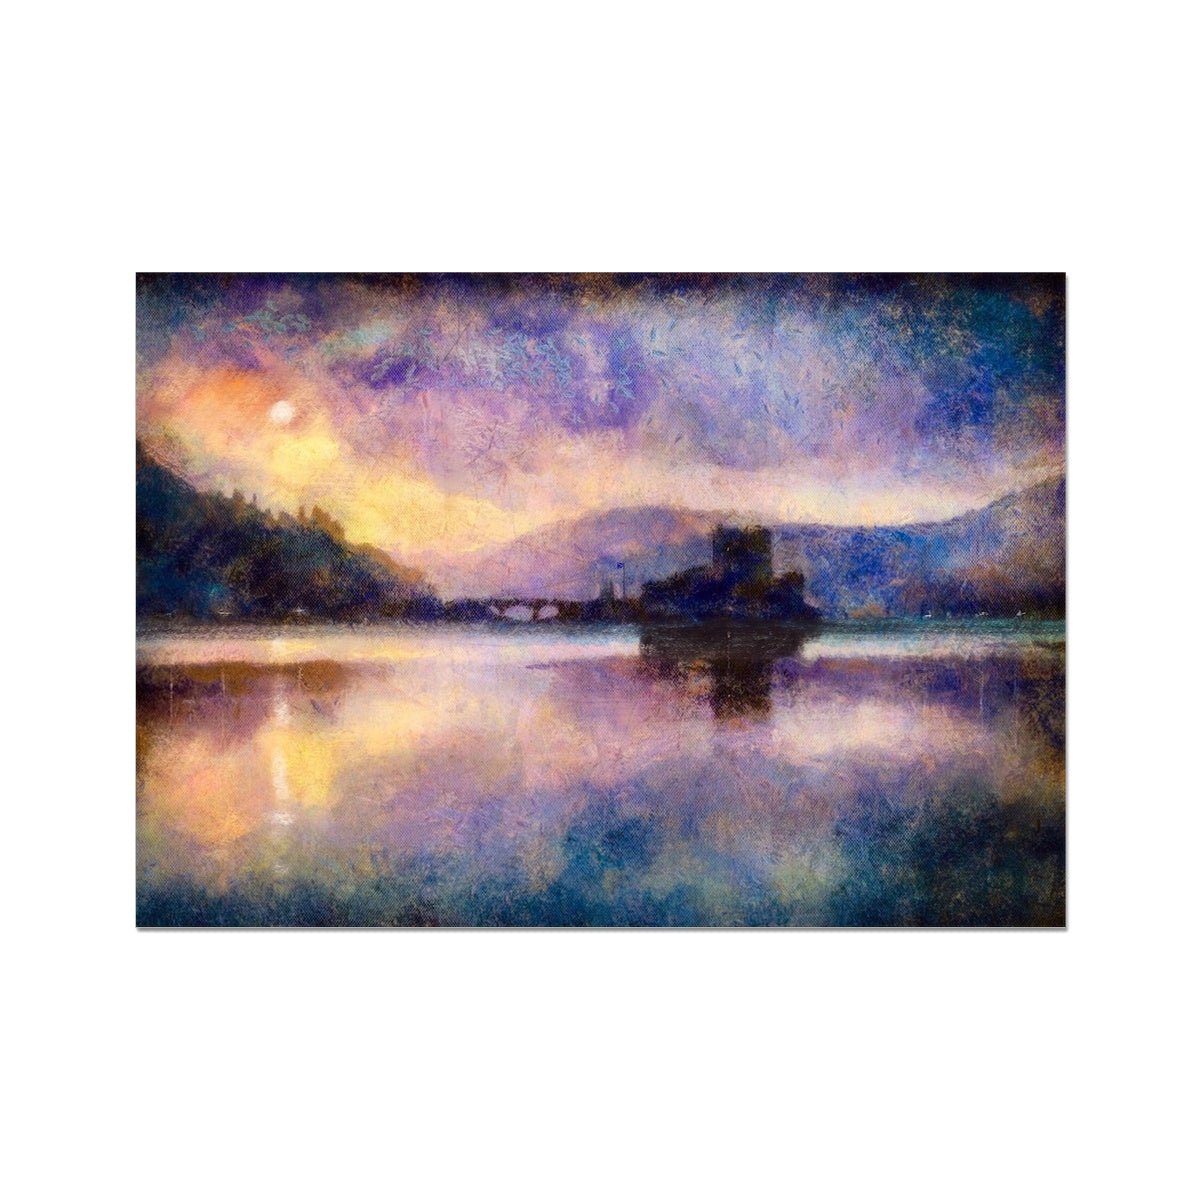 Eilean Donan Castle Moonlight Painting | Fine Art Prints From Scotland-Unframed Prints-Scottish Castles Art Gallery-A2 Landscape-Paintings, Prints, Homeware, Art Gifts From Scotland By Scottish Artist Kevin Hunter